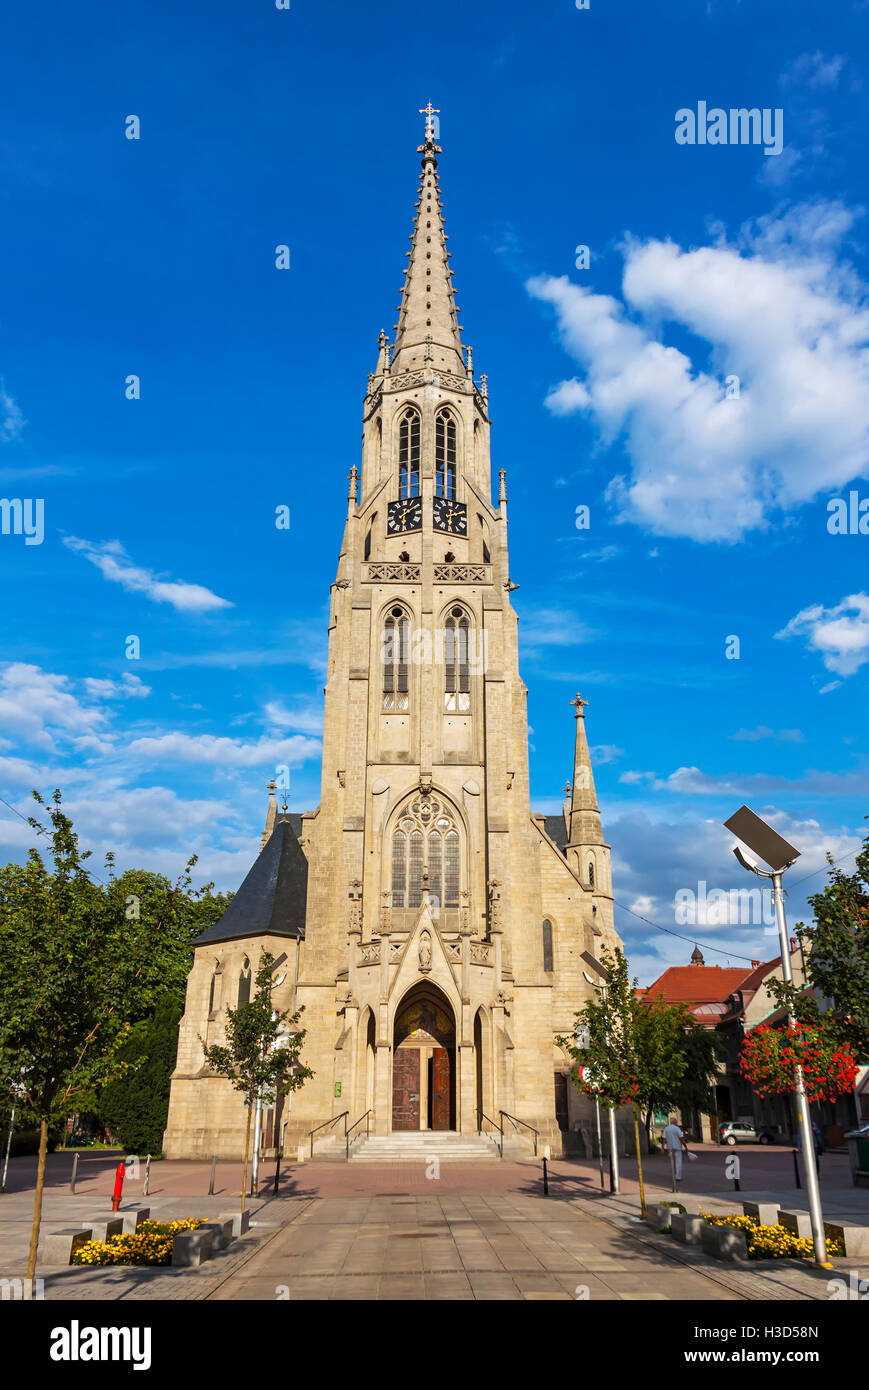 St. Mary's Church (Kosciol Mariacki w Katowicach) in Katowice, Poland Stock Photo